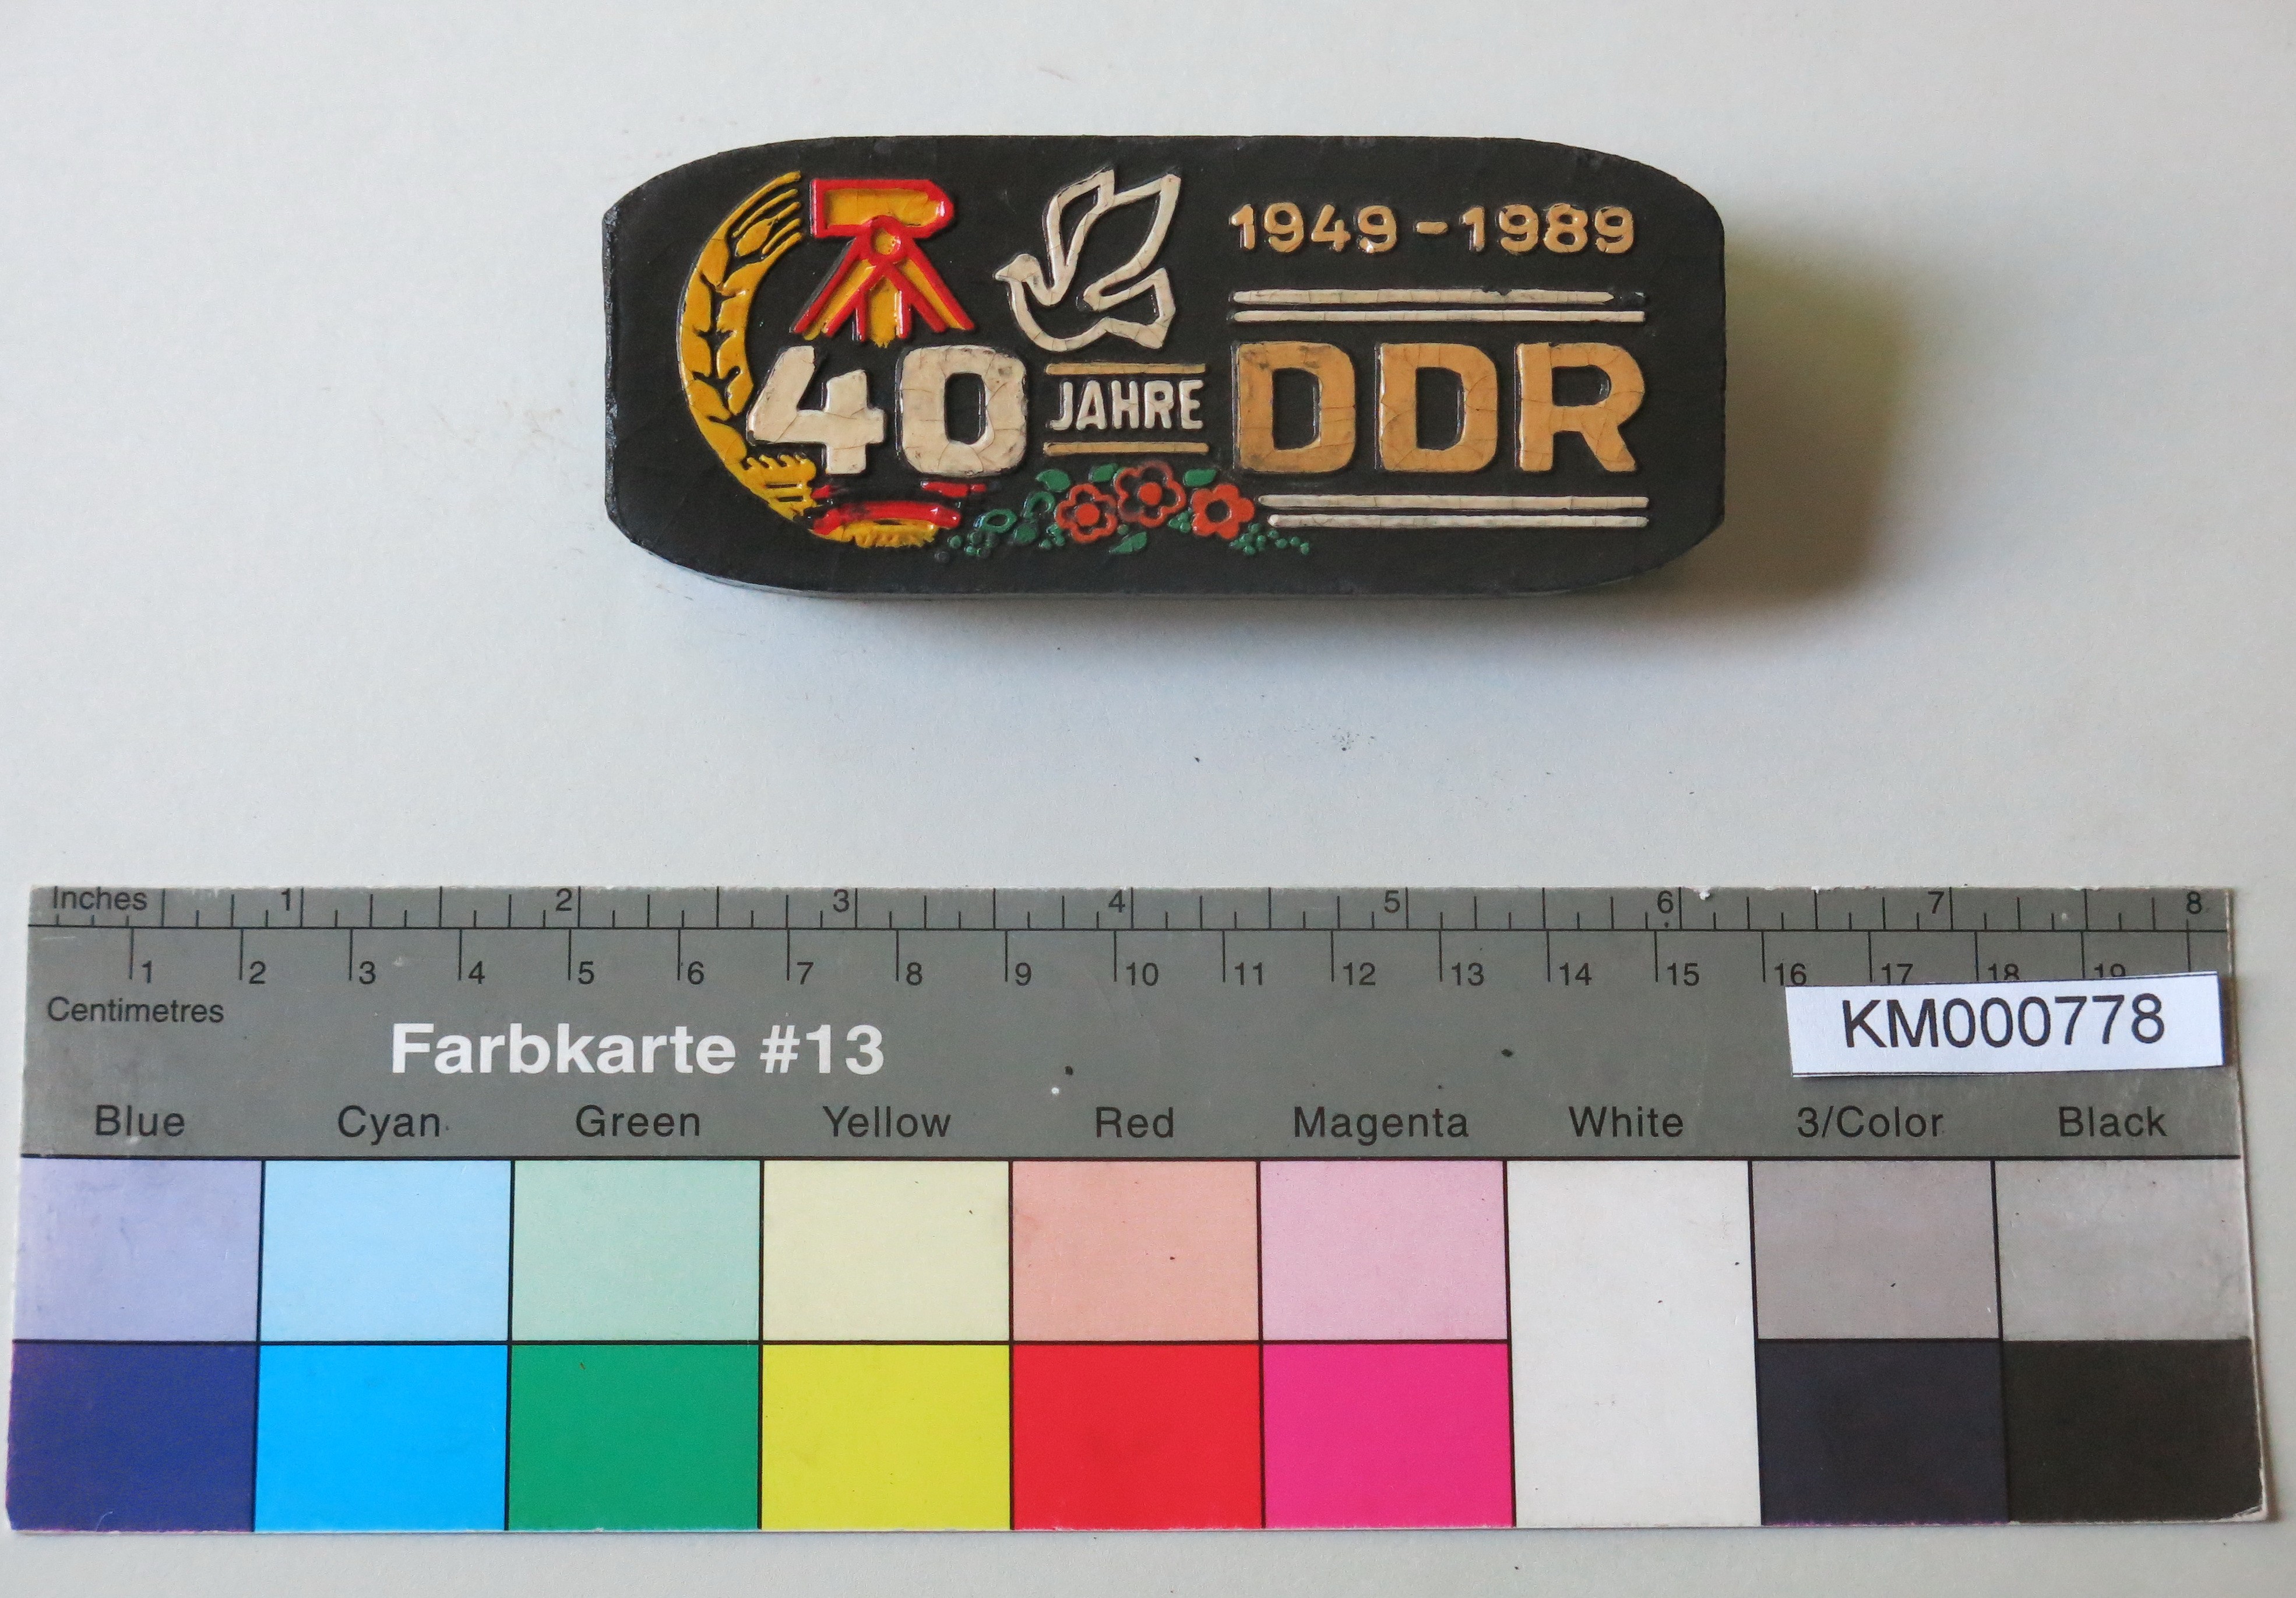 Zierbrikett " 40 JAHRE DDR 1949-1989" (Energiefabrik Knappenrode CC BY-SA)